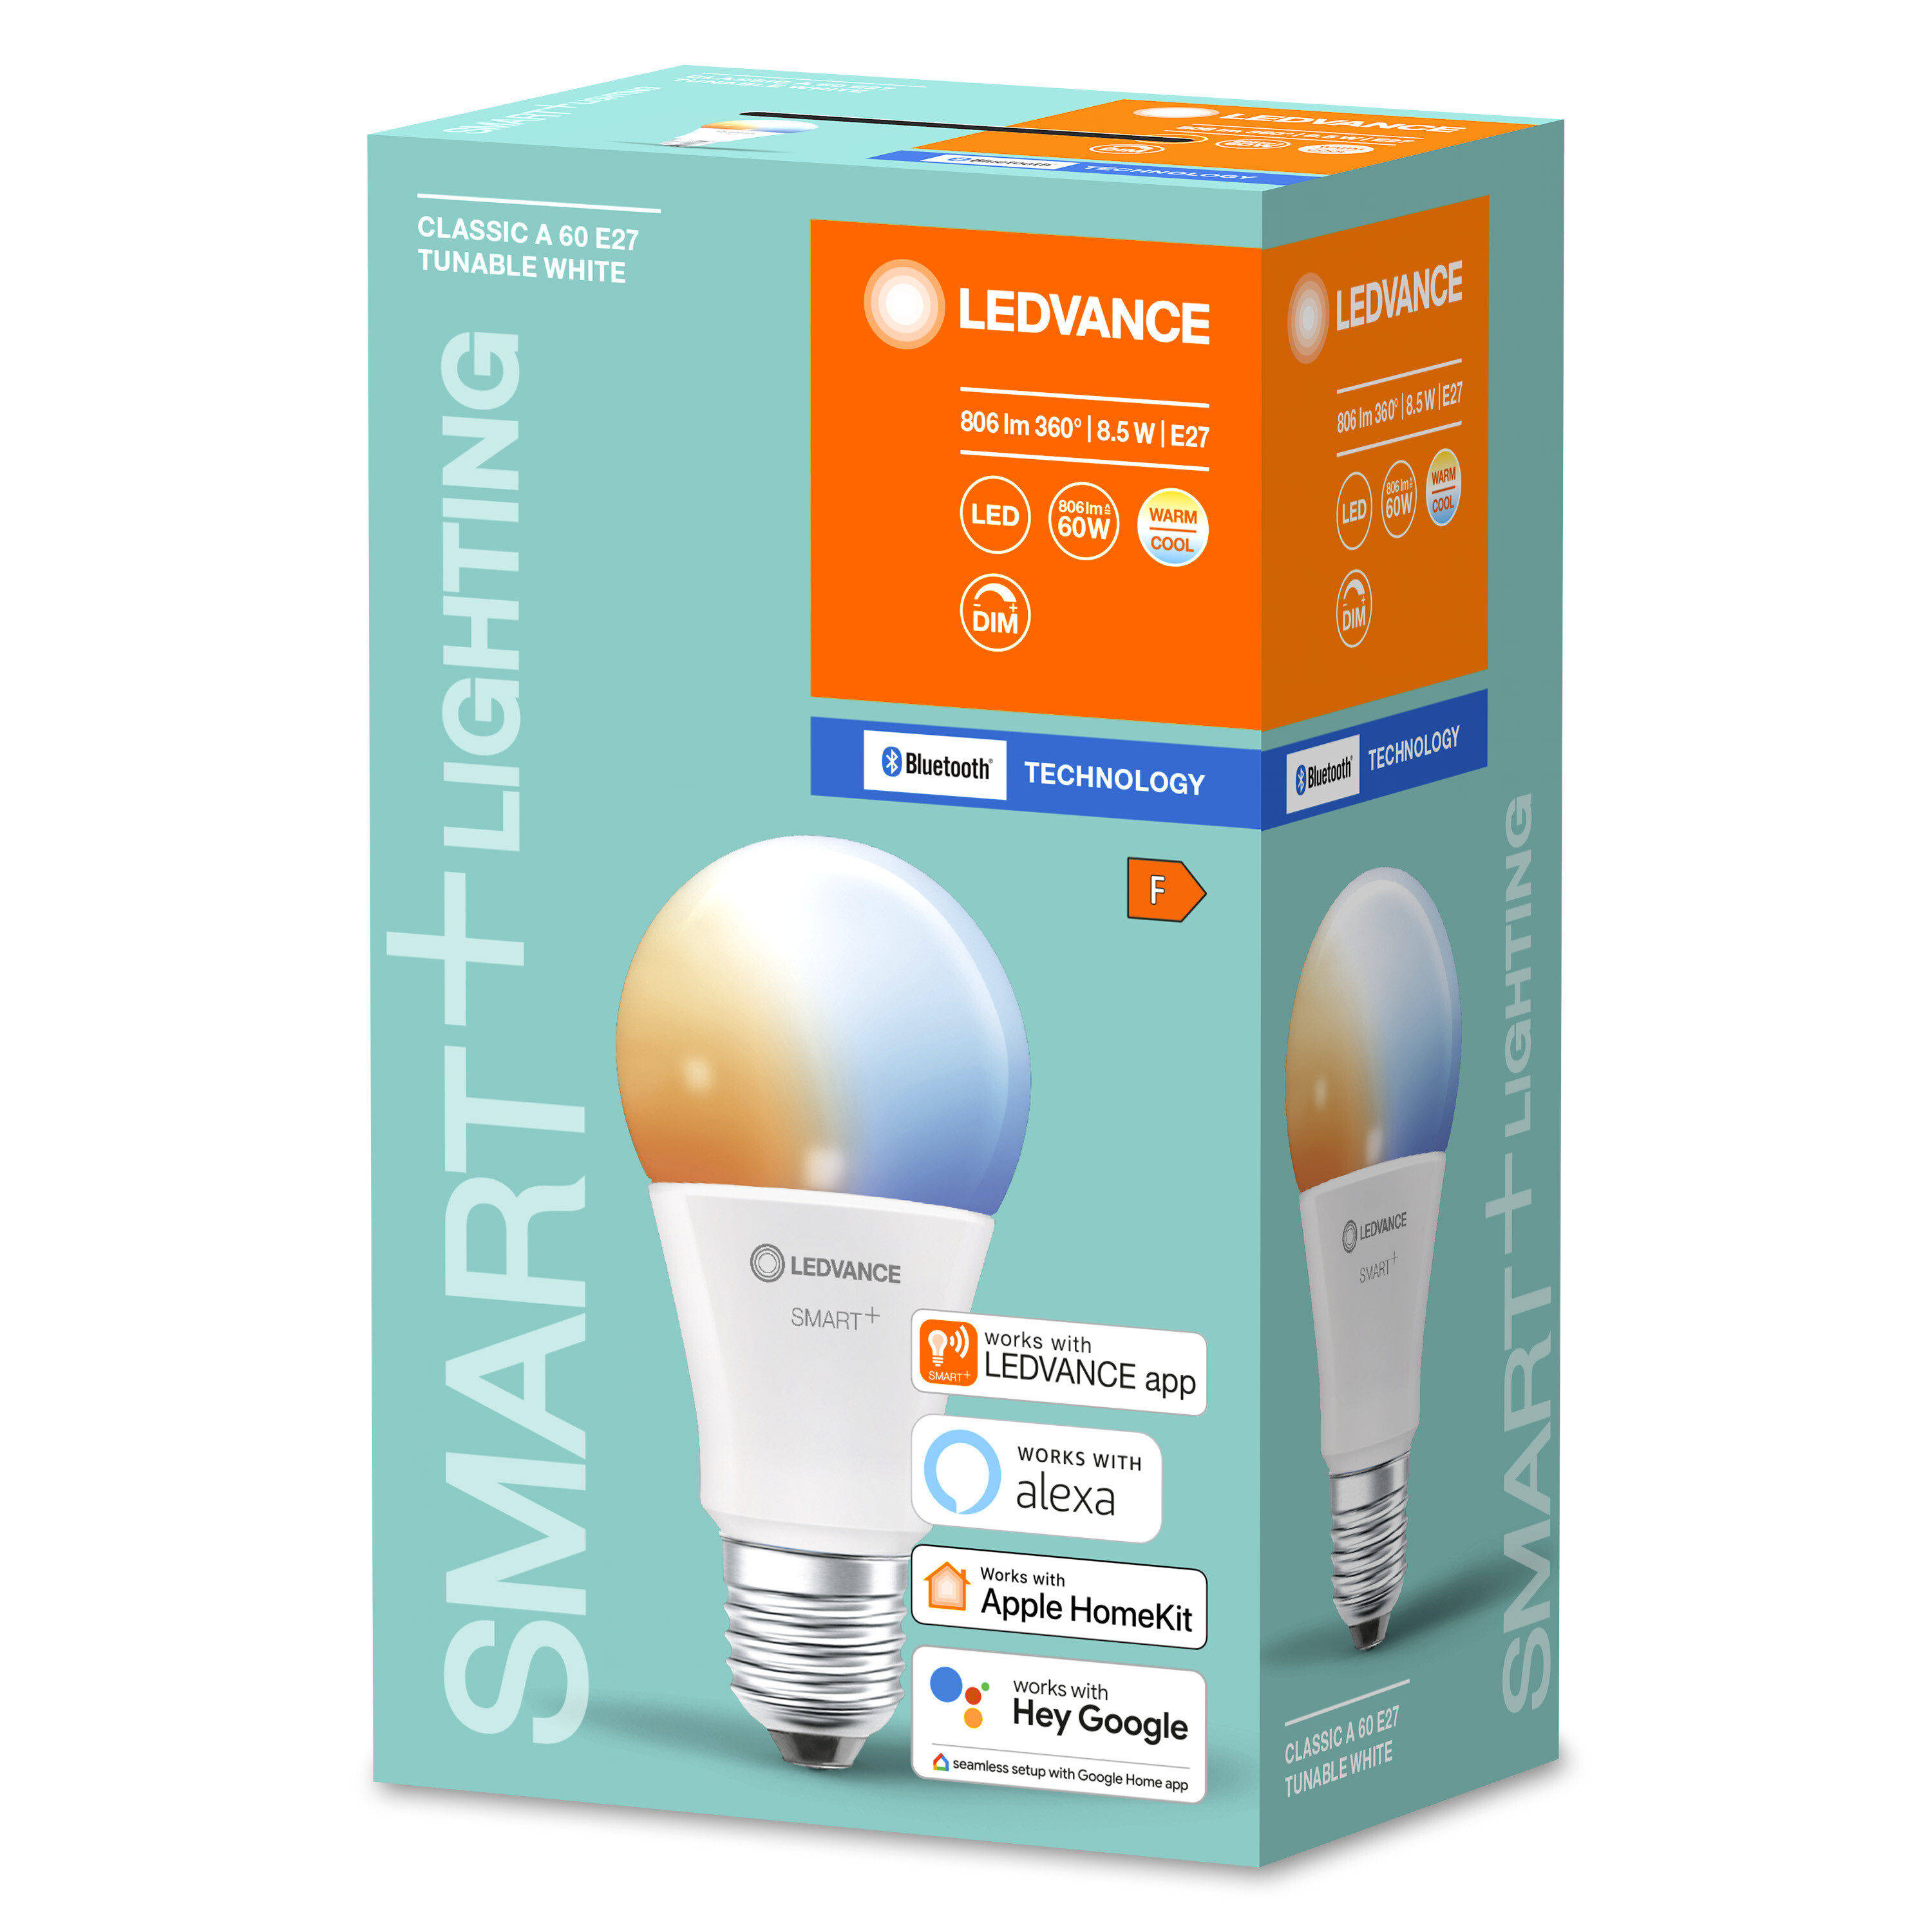 LEDVANCE SMART+ White Tunable Classic änderbar Lampe LED Lichtfarbe